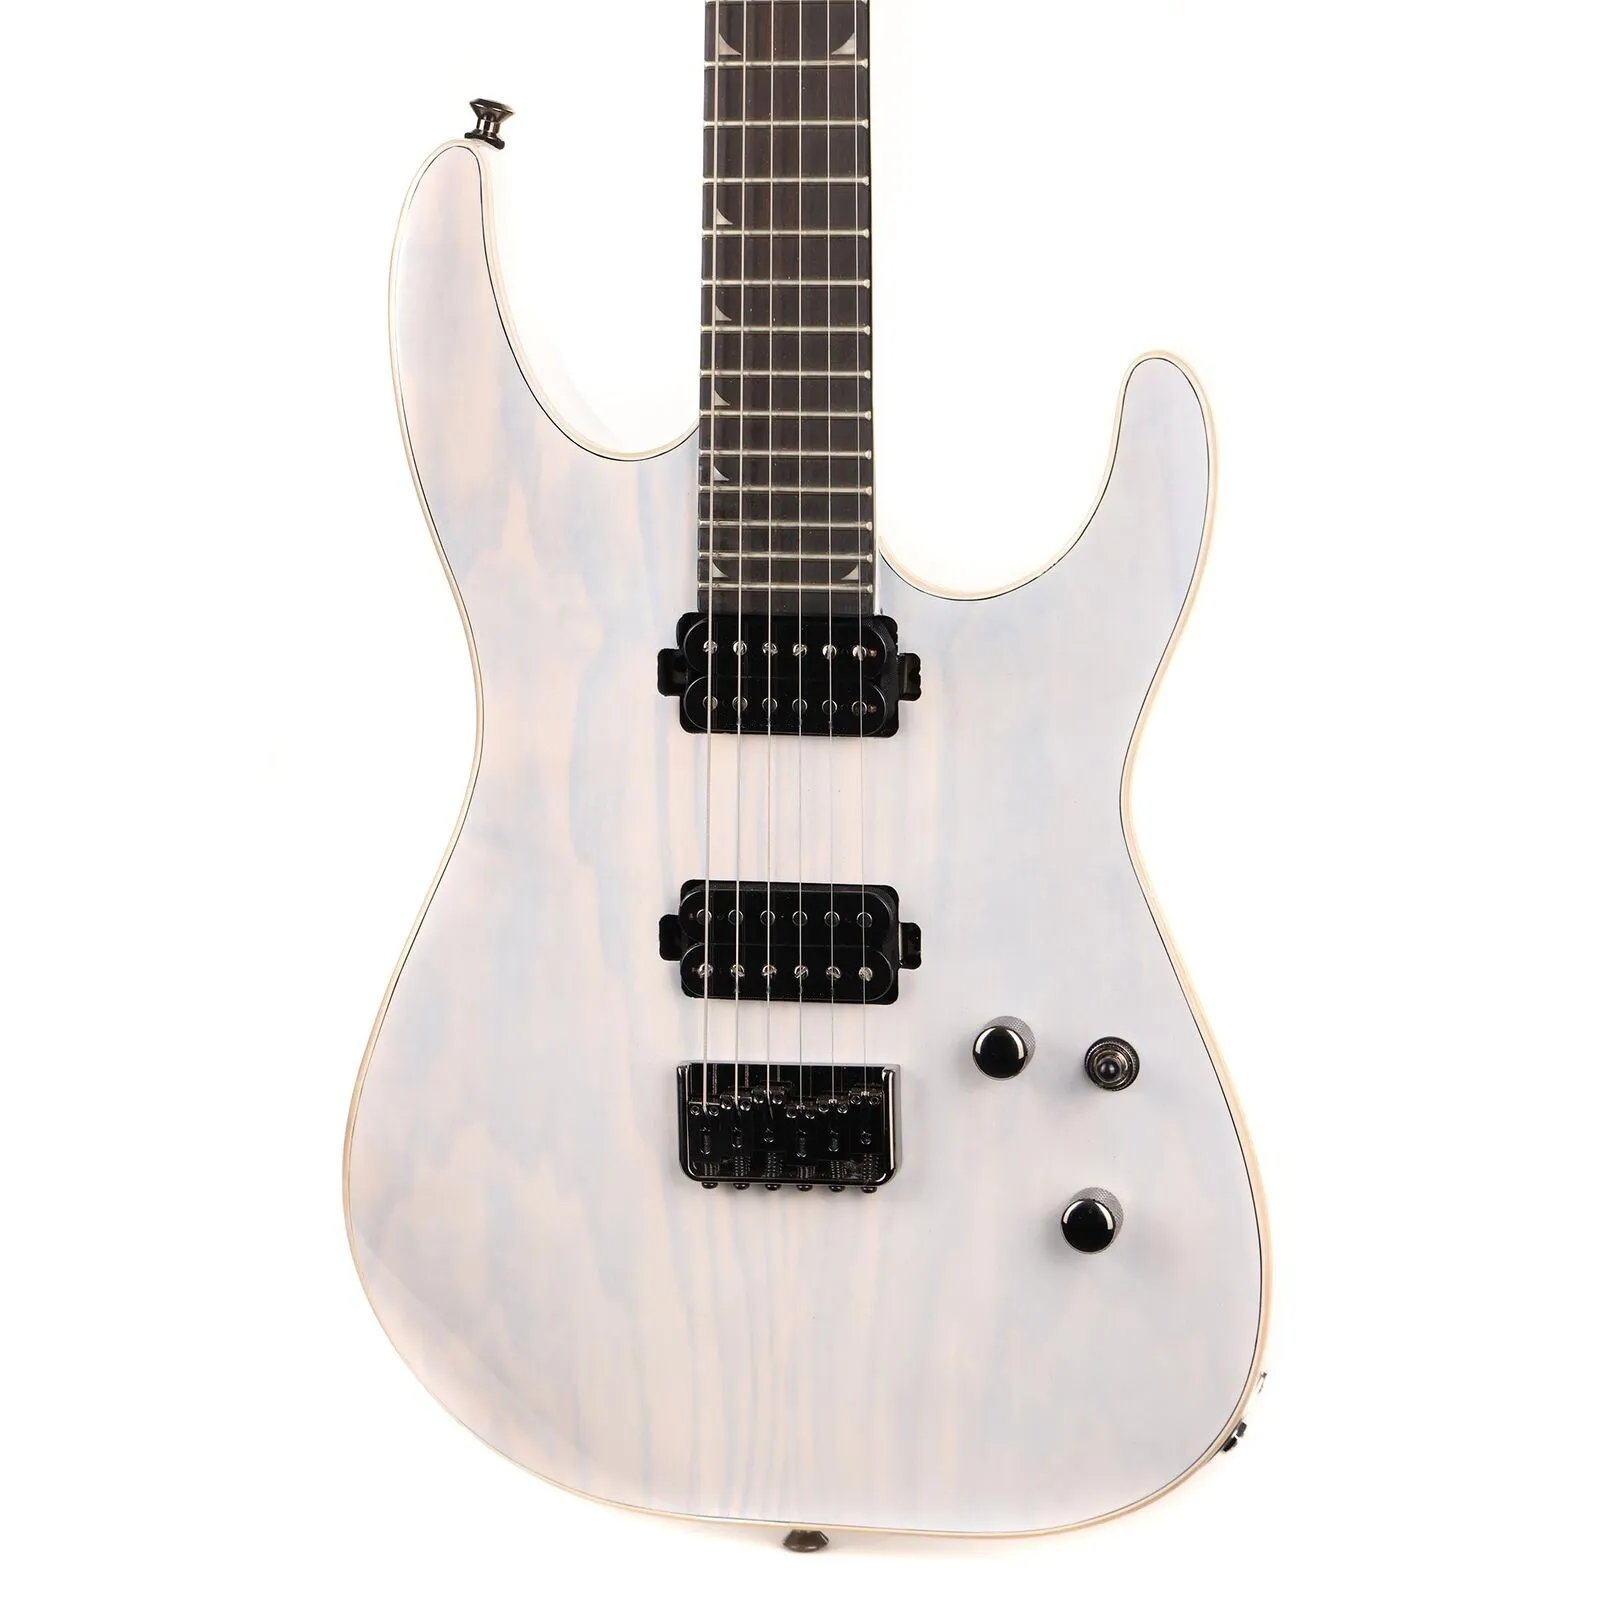 Pro Series solist SL2A MAH HT Unicorn White Electric Guitar som samma av bilderna